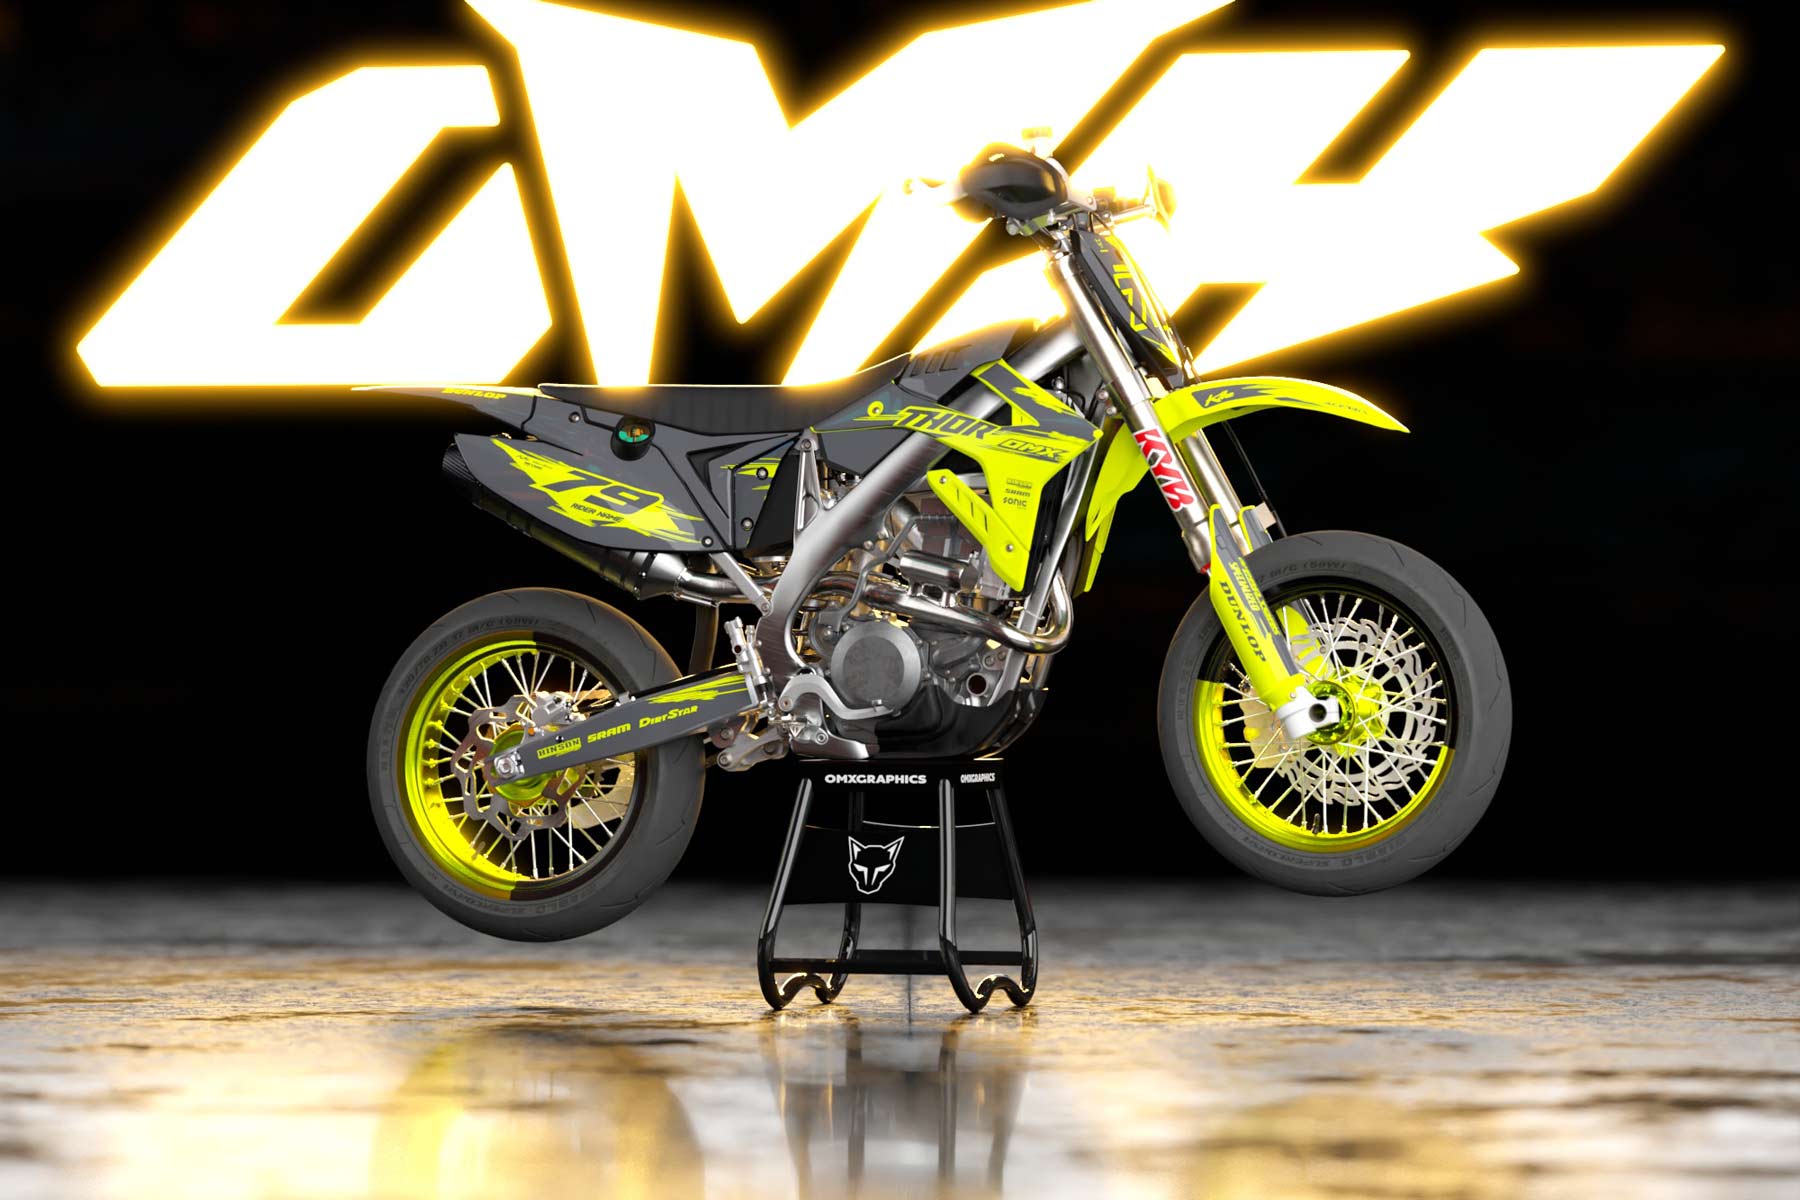 Mx Graphics Kit TM Racing Punch Lime Promo